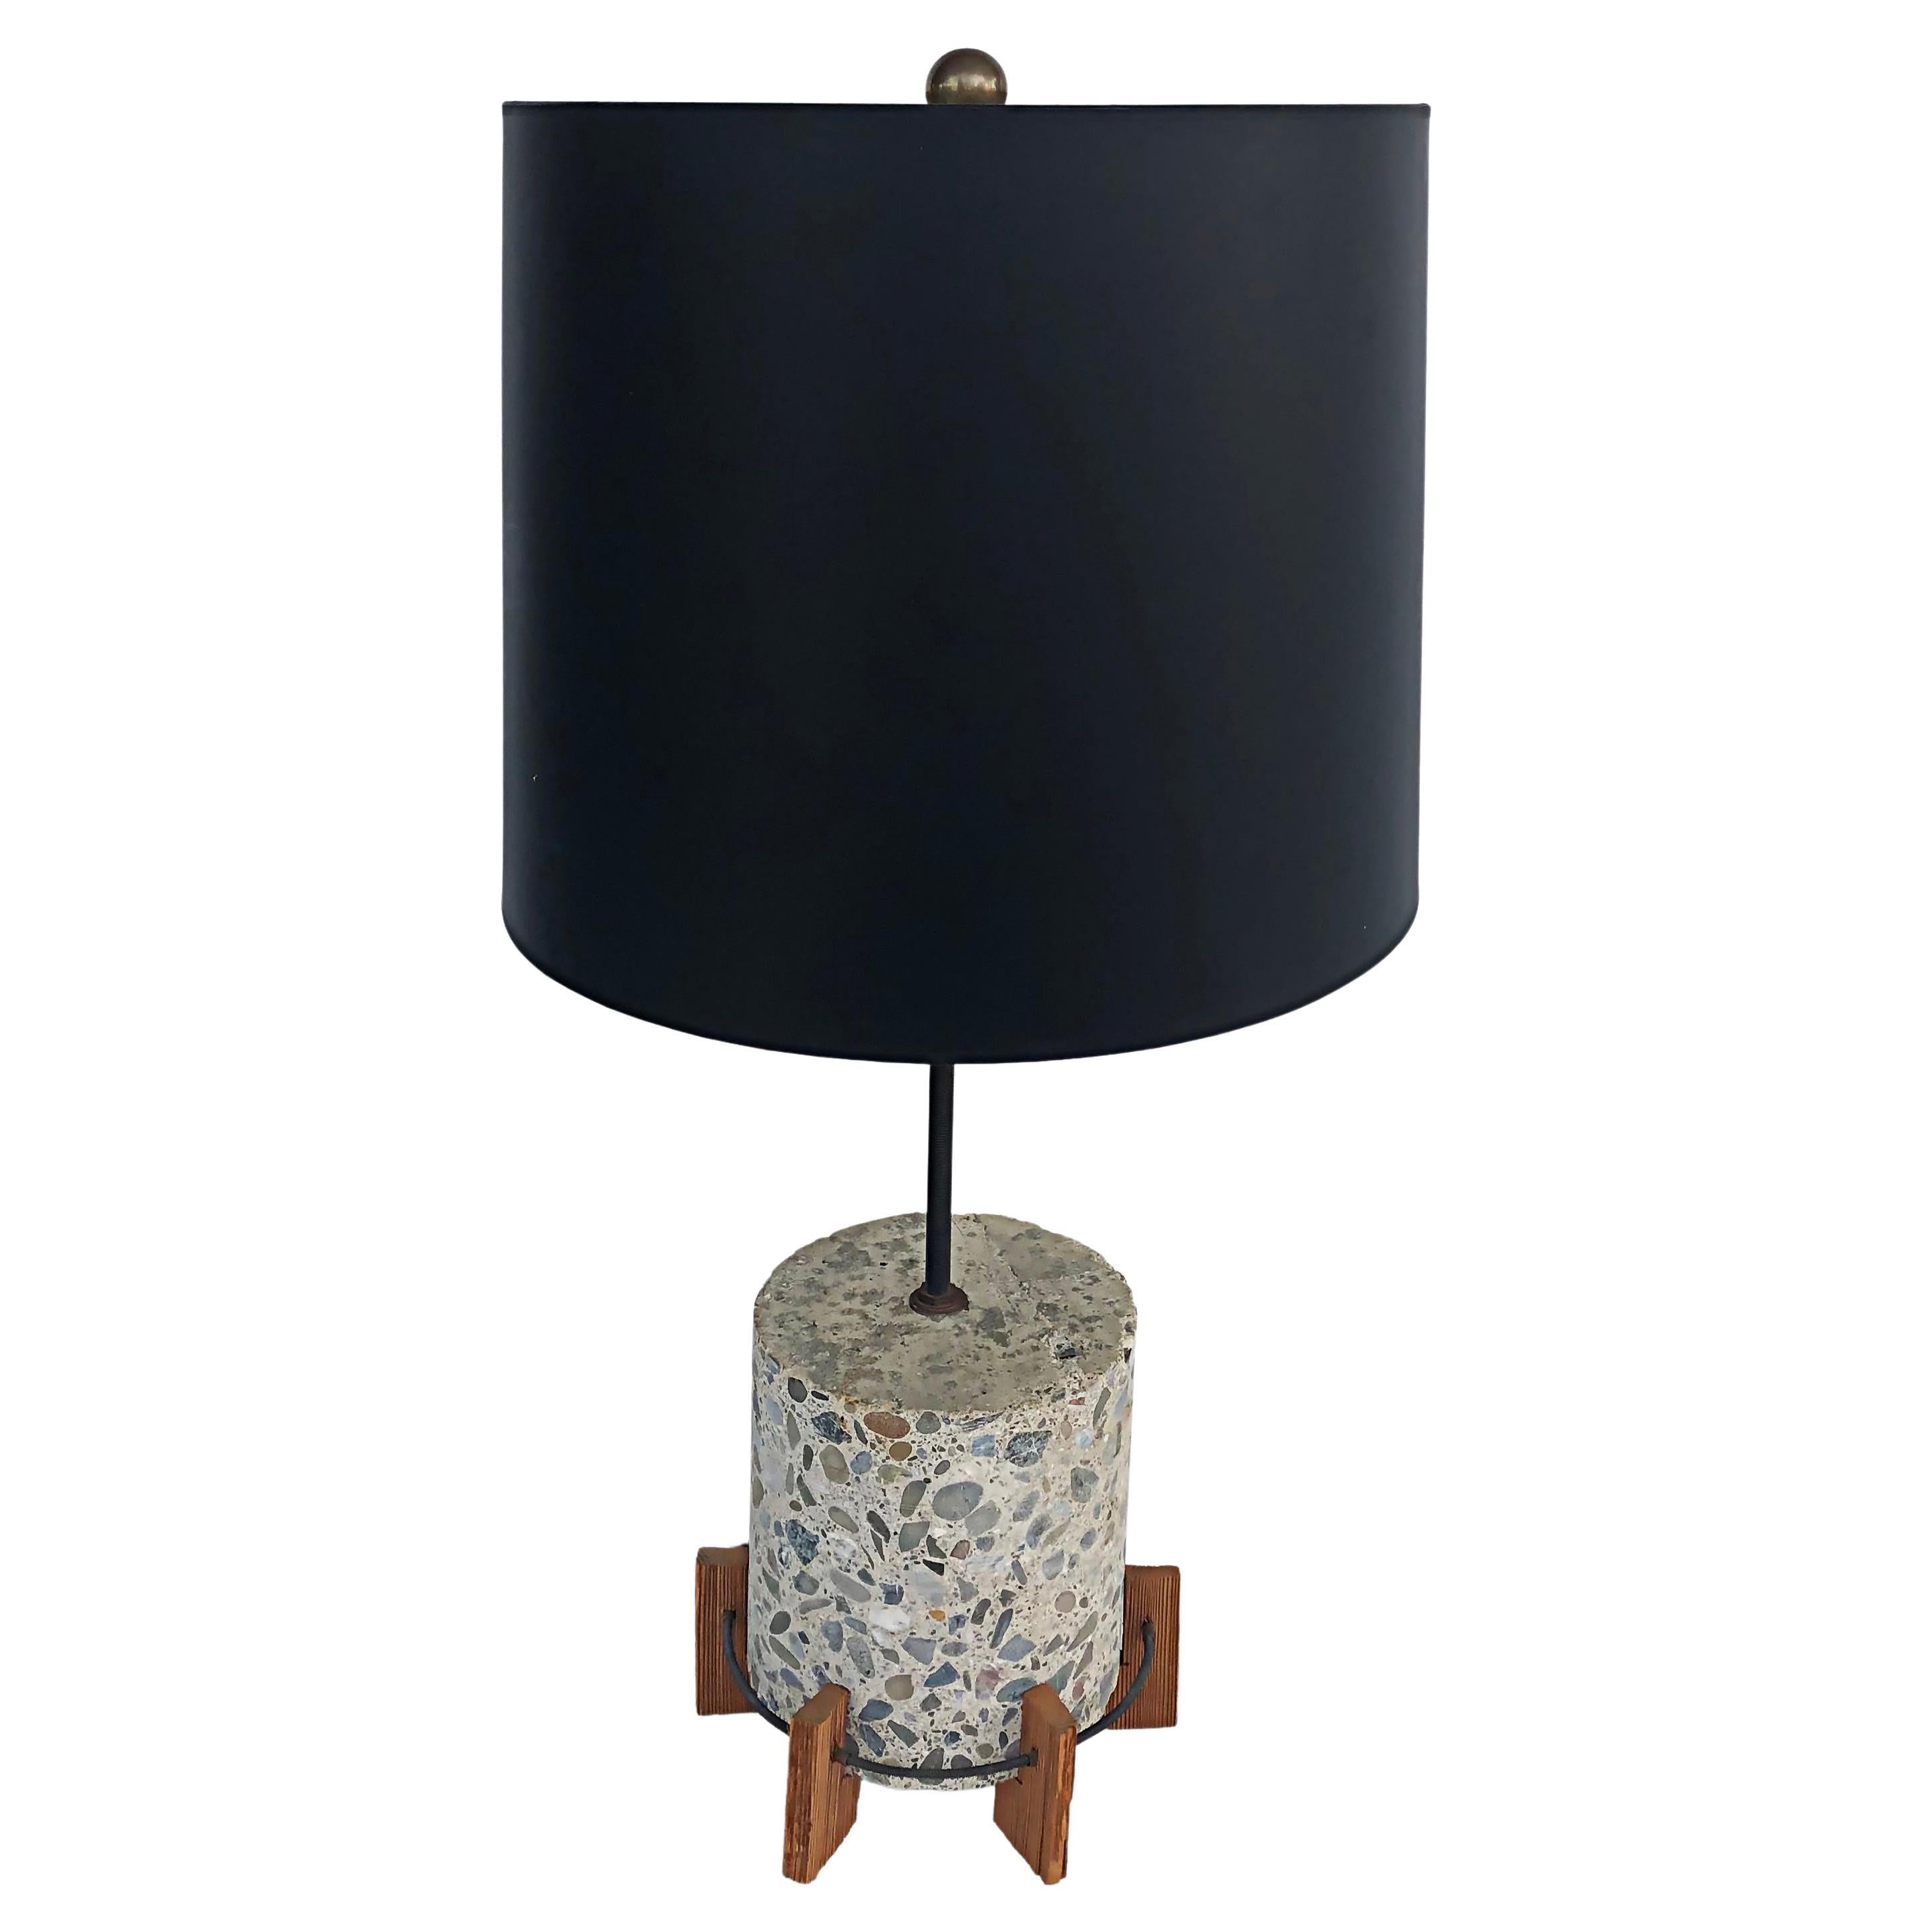 Vintage Richard Lee Parker Studio Terrazzo Wood Table Lamp, Signed 1992 For Sale